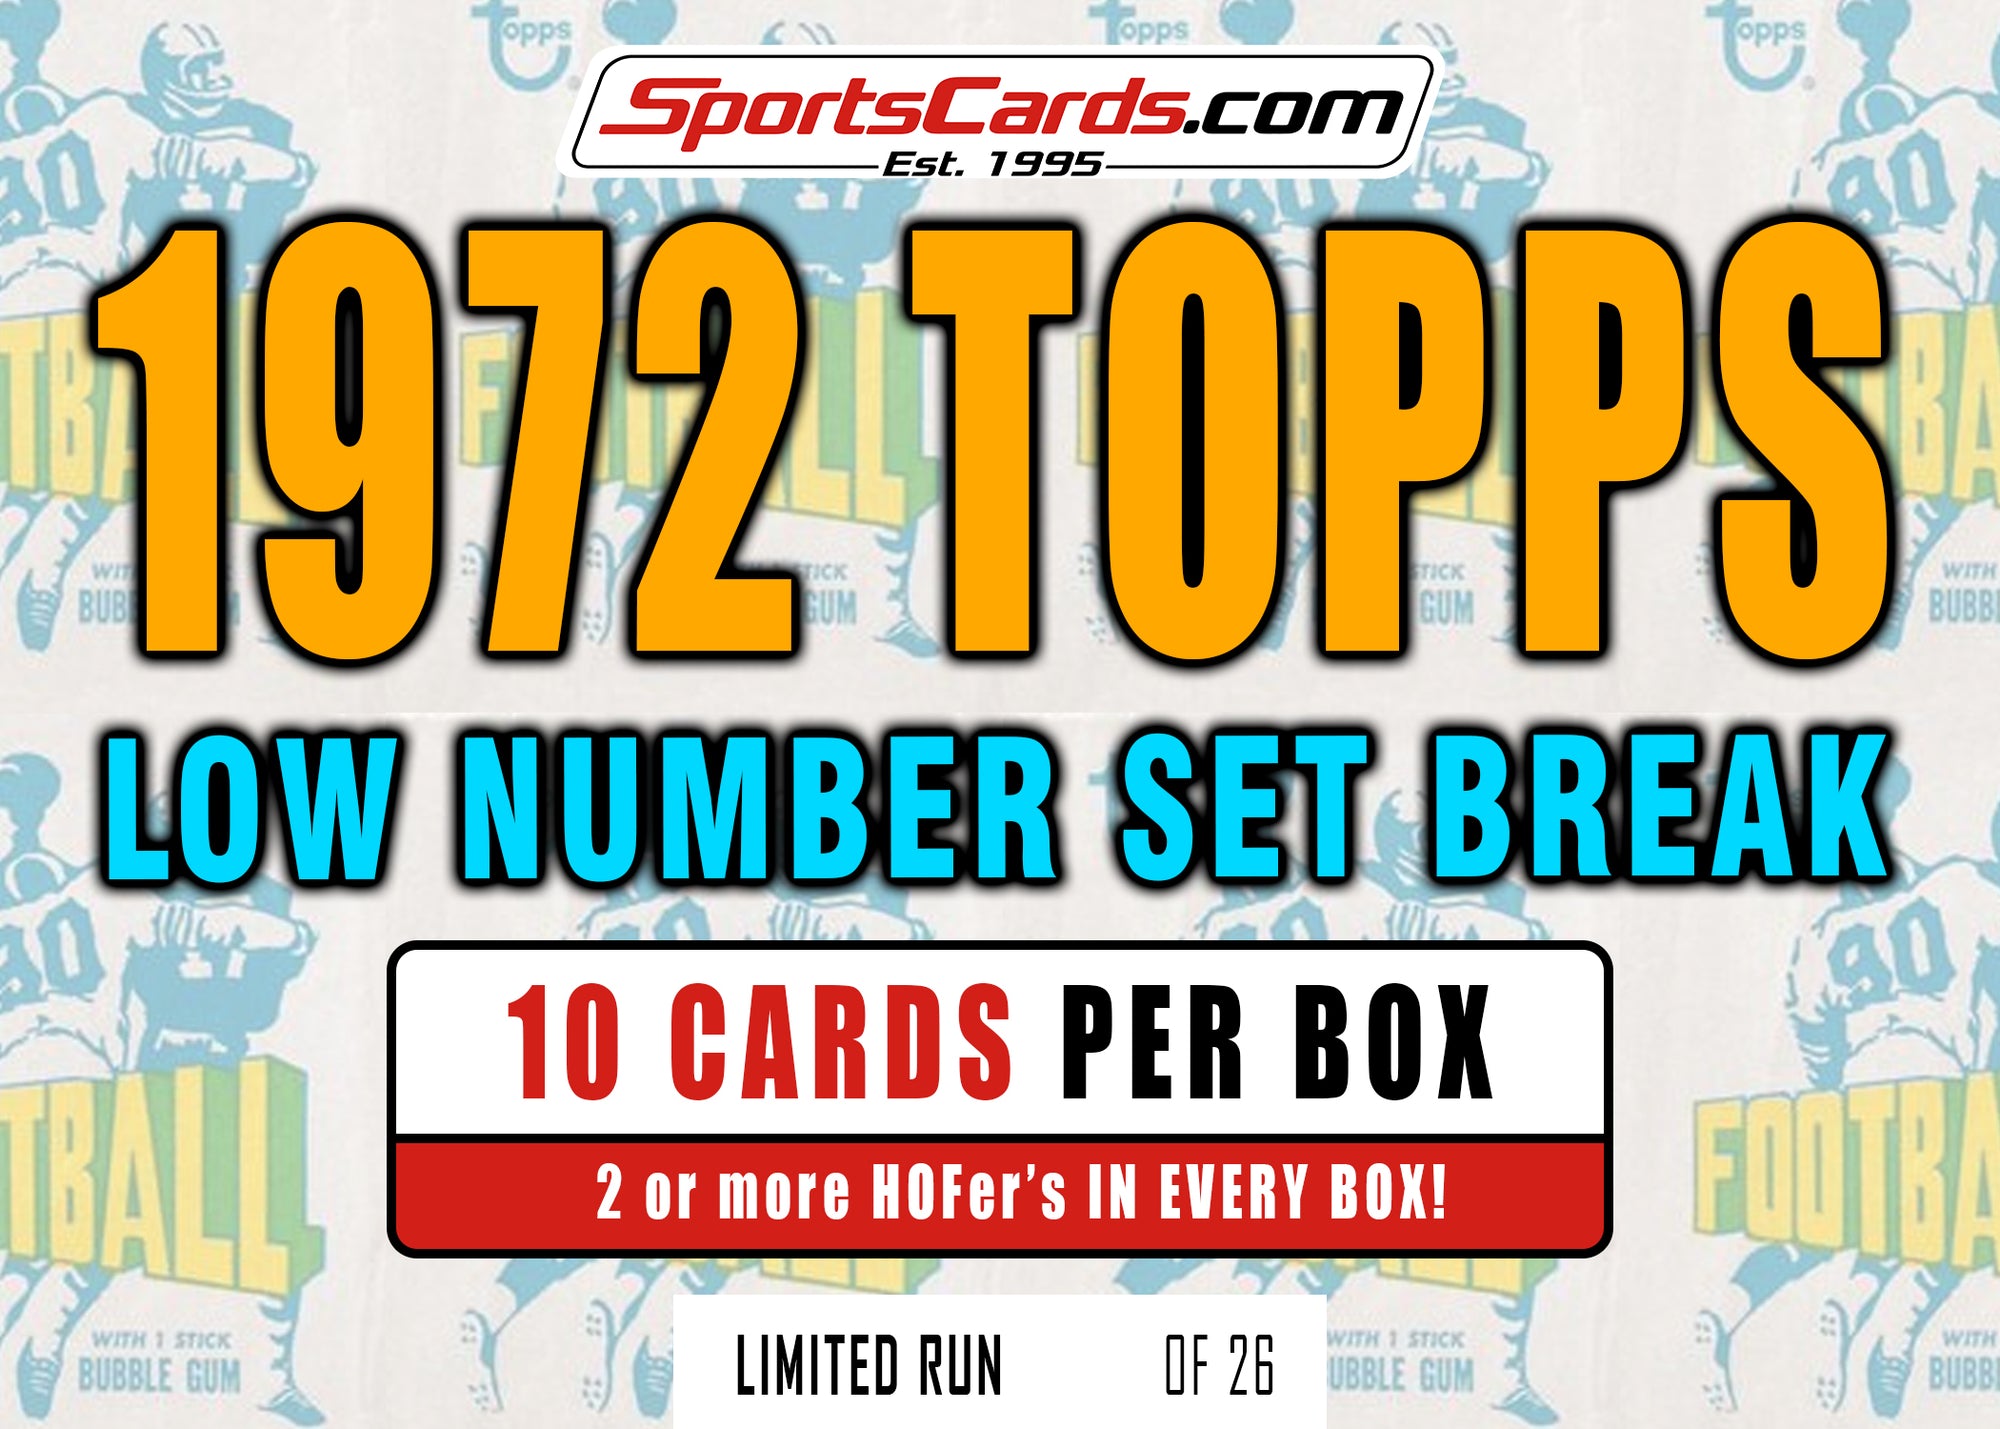 1972 TOPPS FOOTBALL LOW NUMBER SET BREAK BOX– 10 CARDS PER BOX!